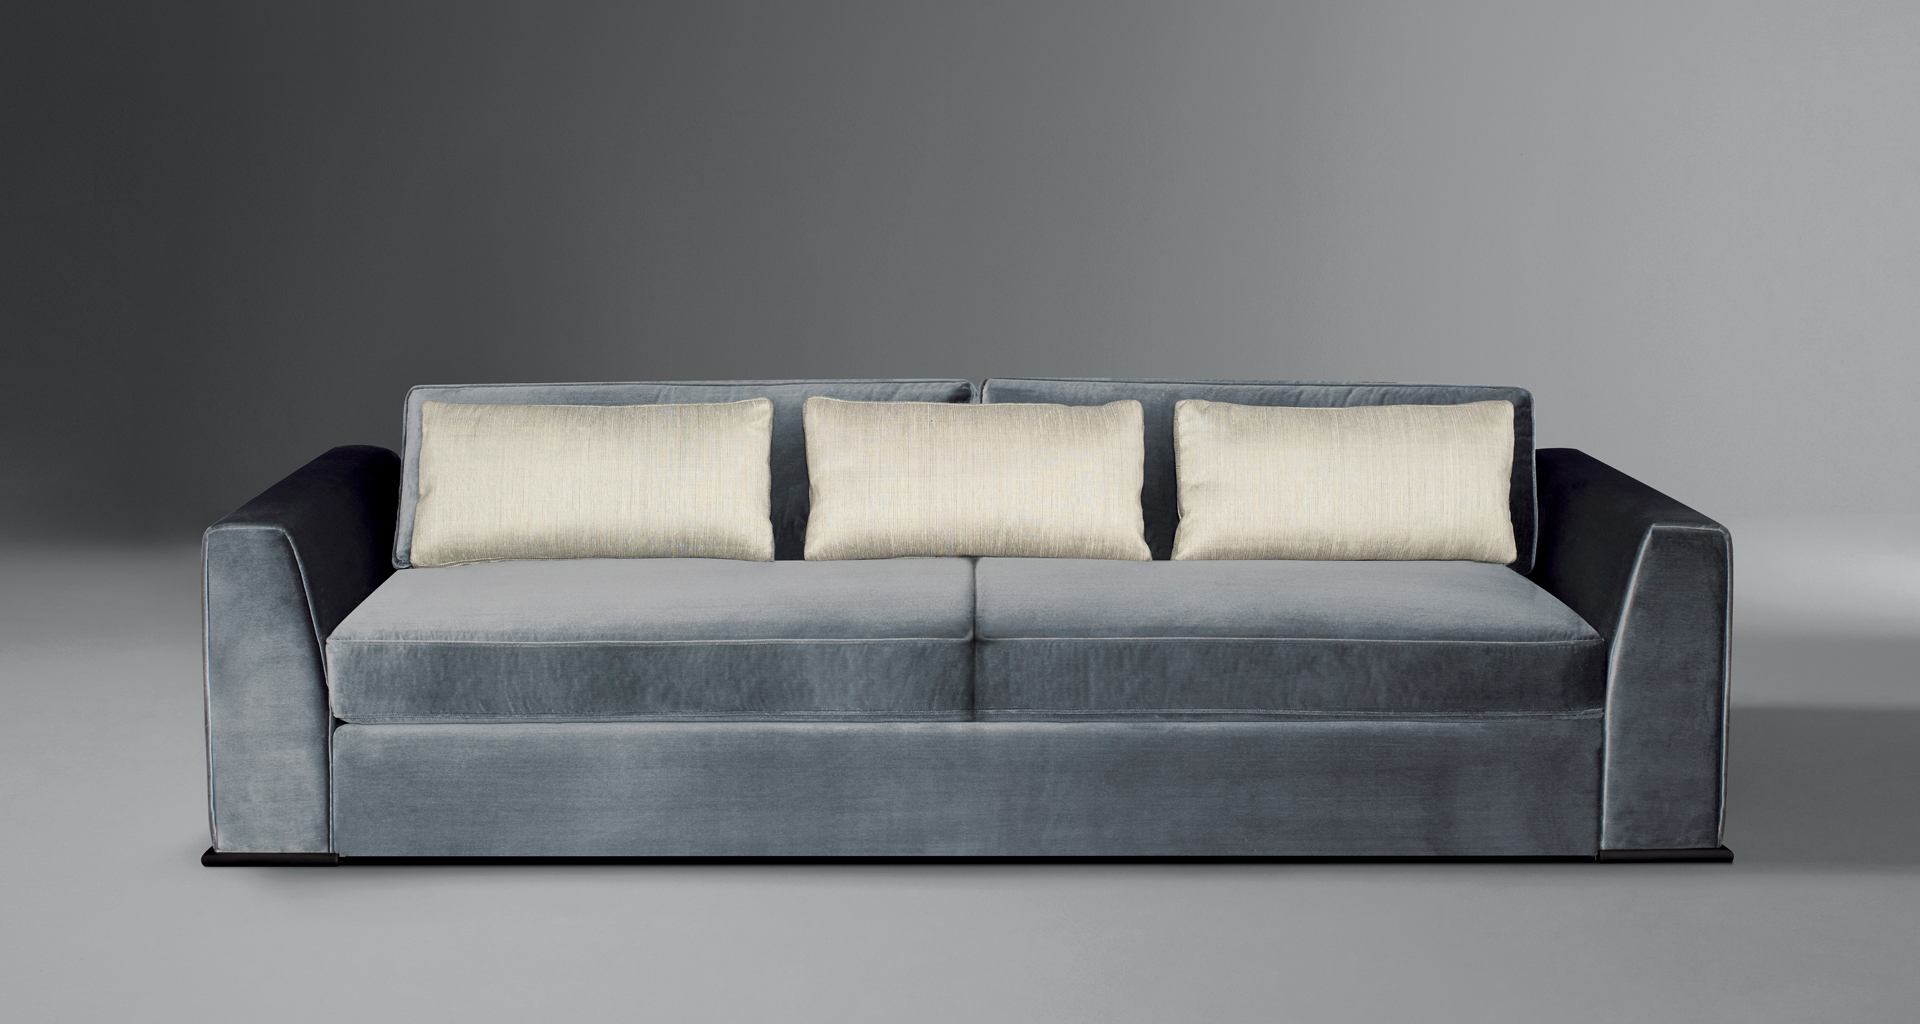 Ulderico is a wooden sofa covered in fabric, from Promemoria's catalogue | Promemoria